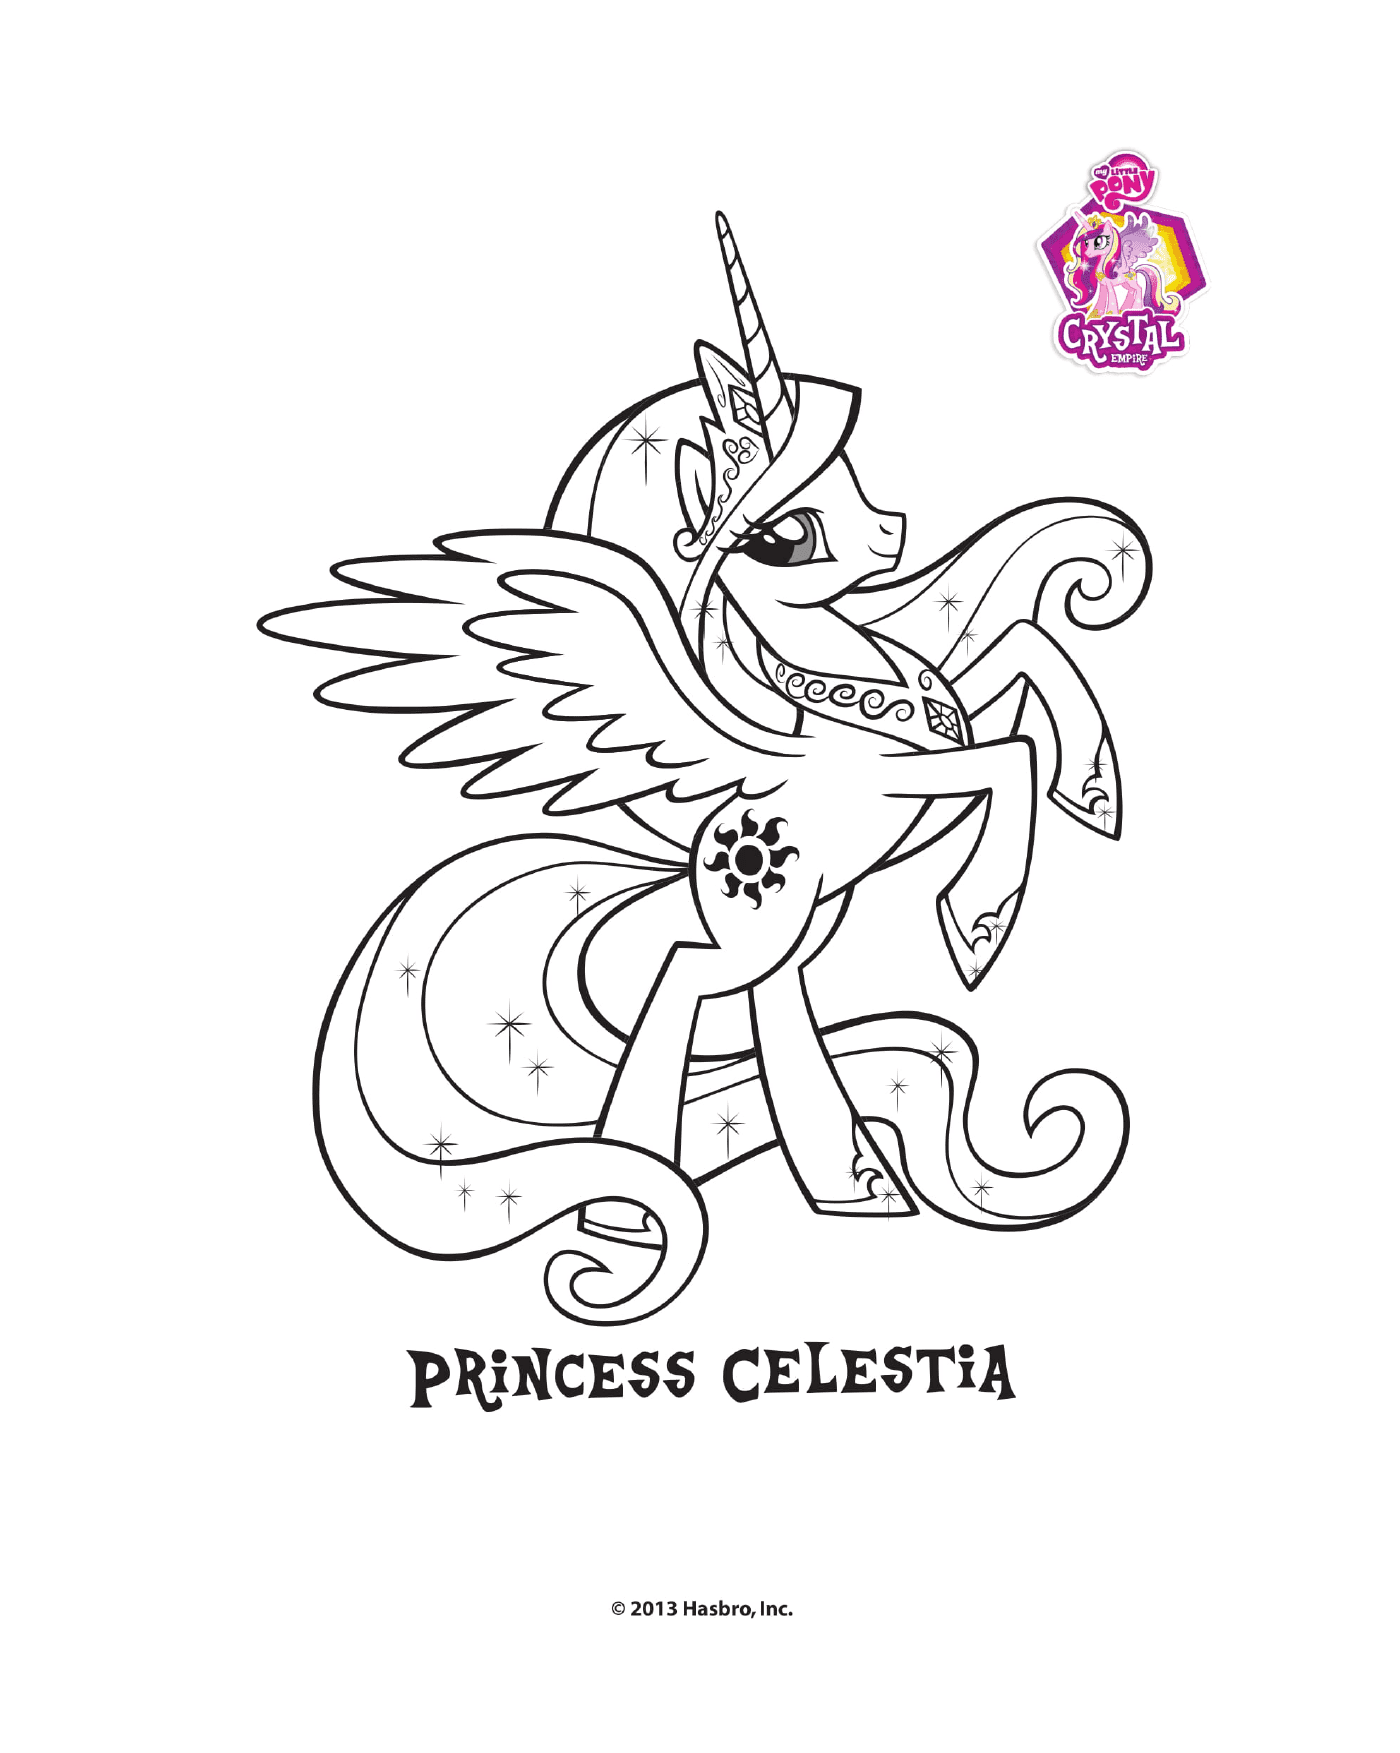   Princesse Celestia du Crystal Empire 